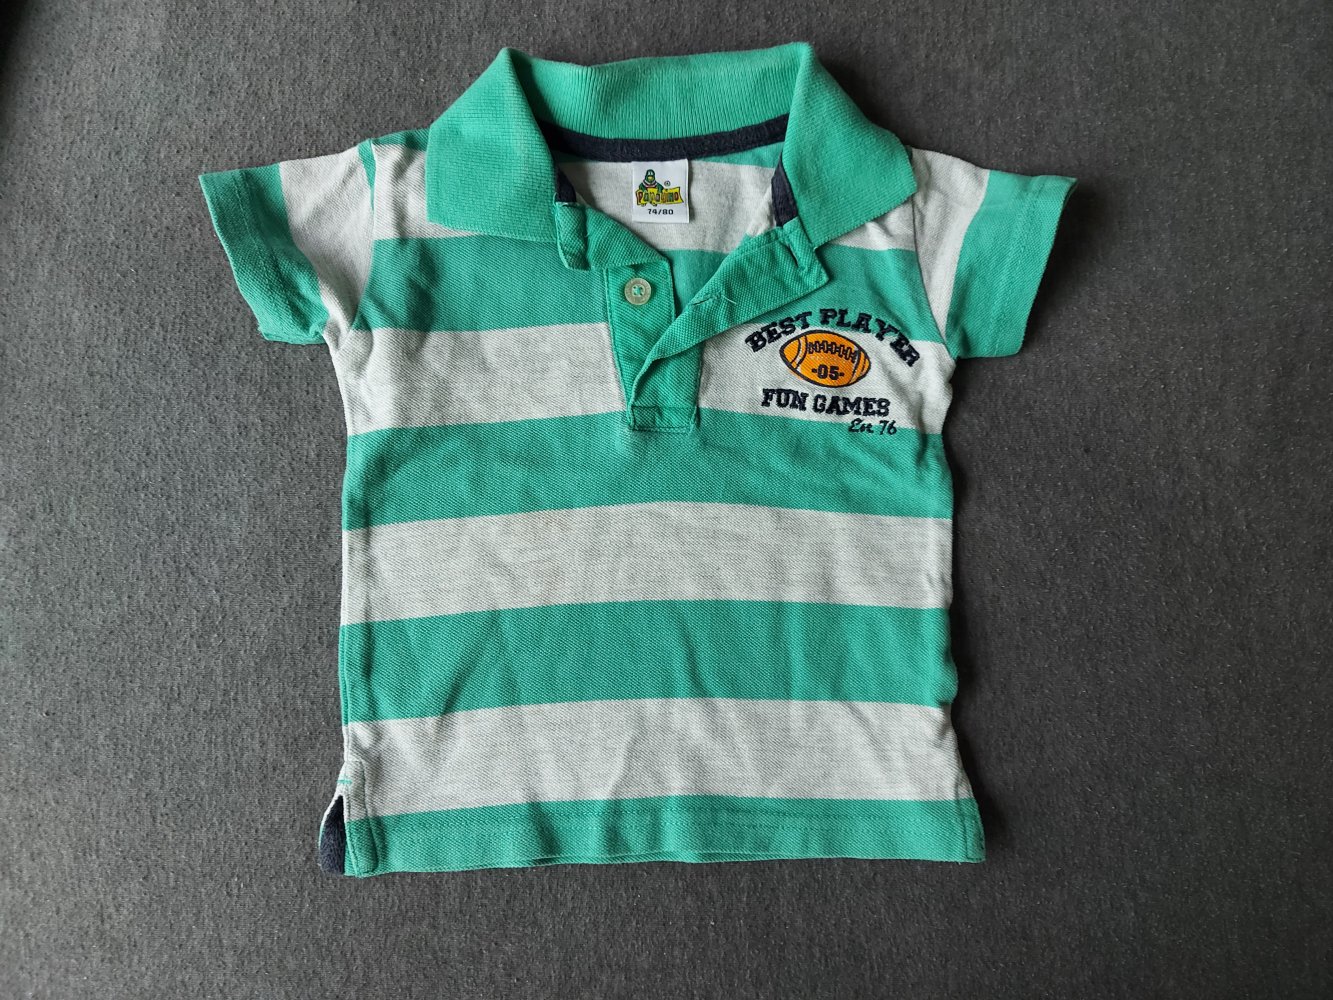 kurzärmliges grün-grau gestreiftes Baby-Poloshirt Gr. 74/80